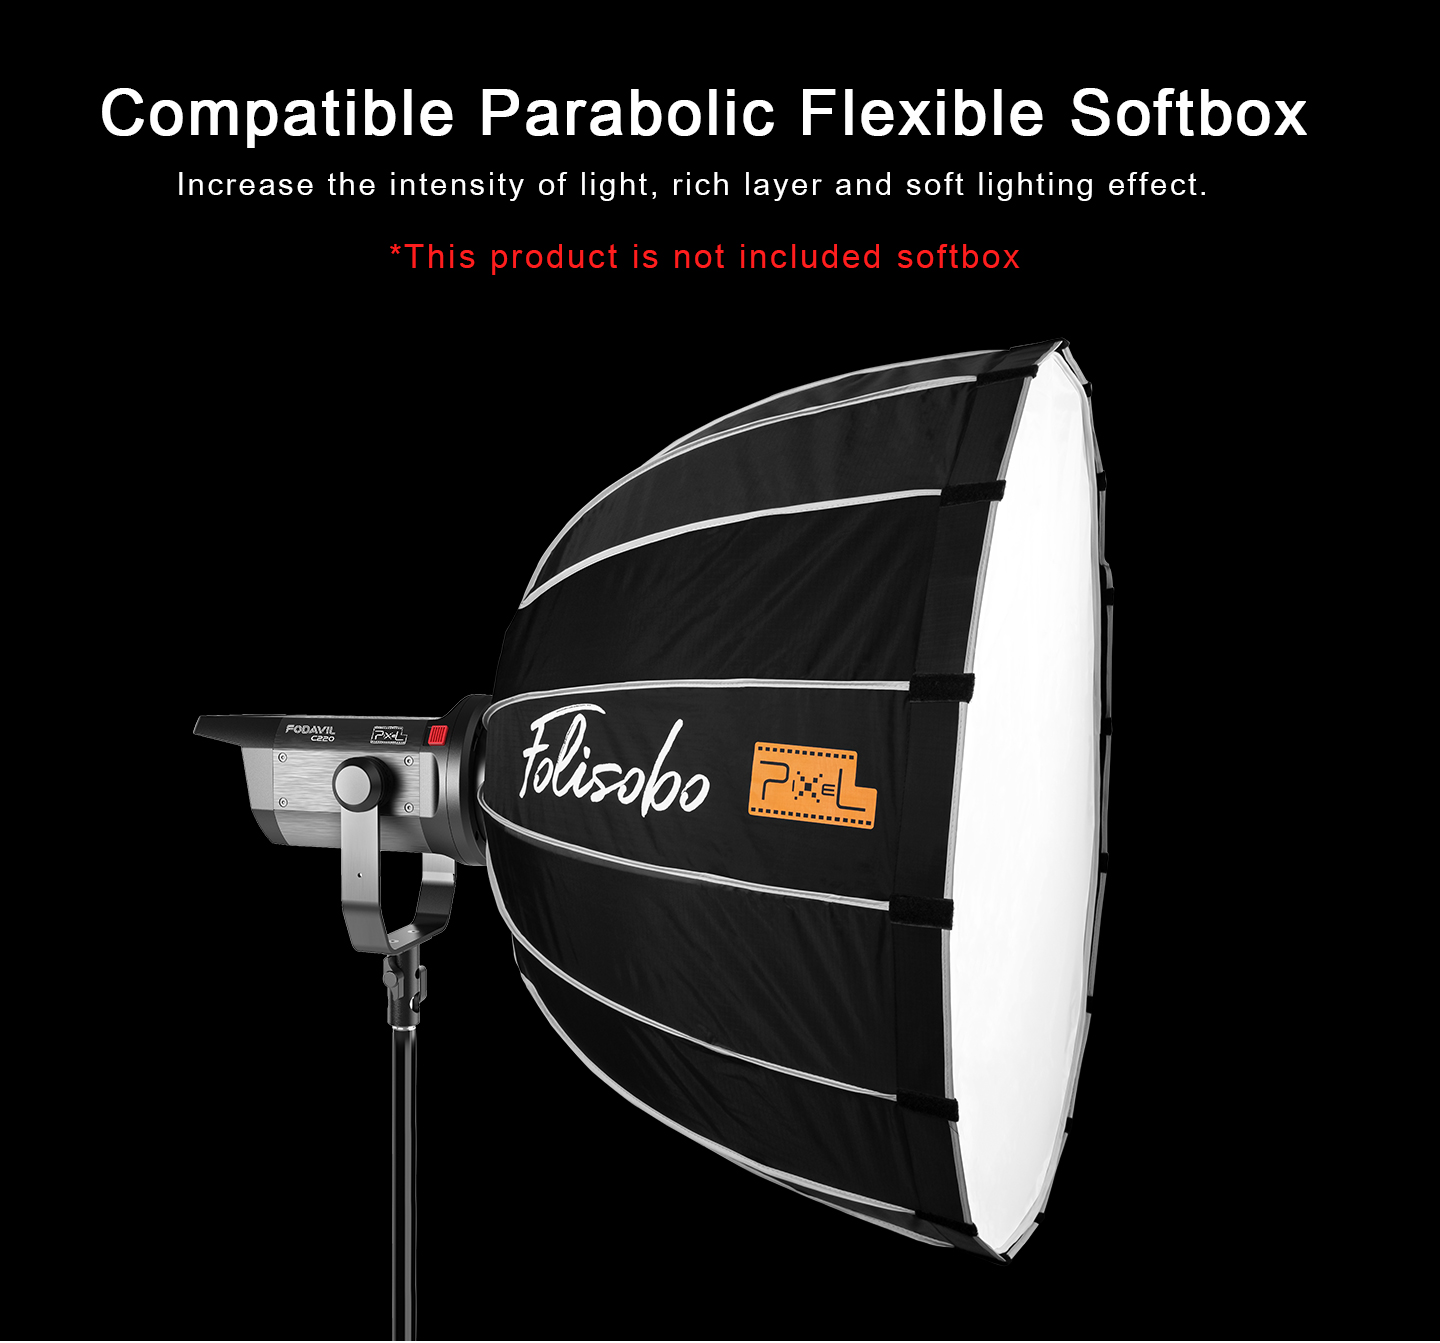 Compatible Parabolic Flexible Softbox